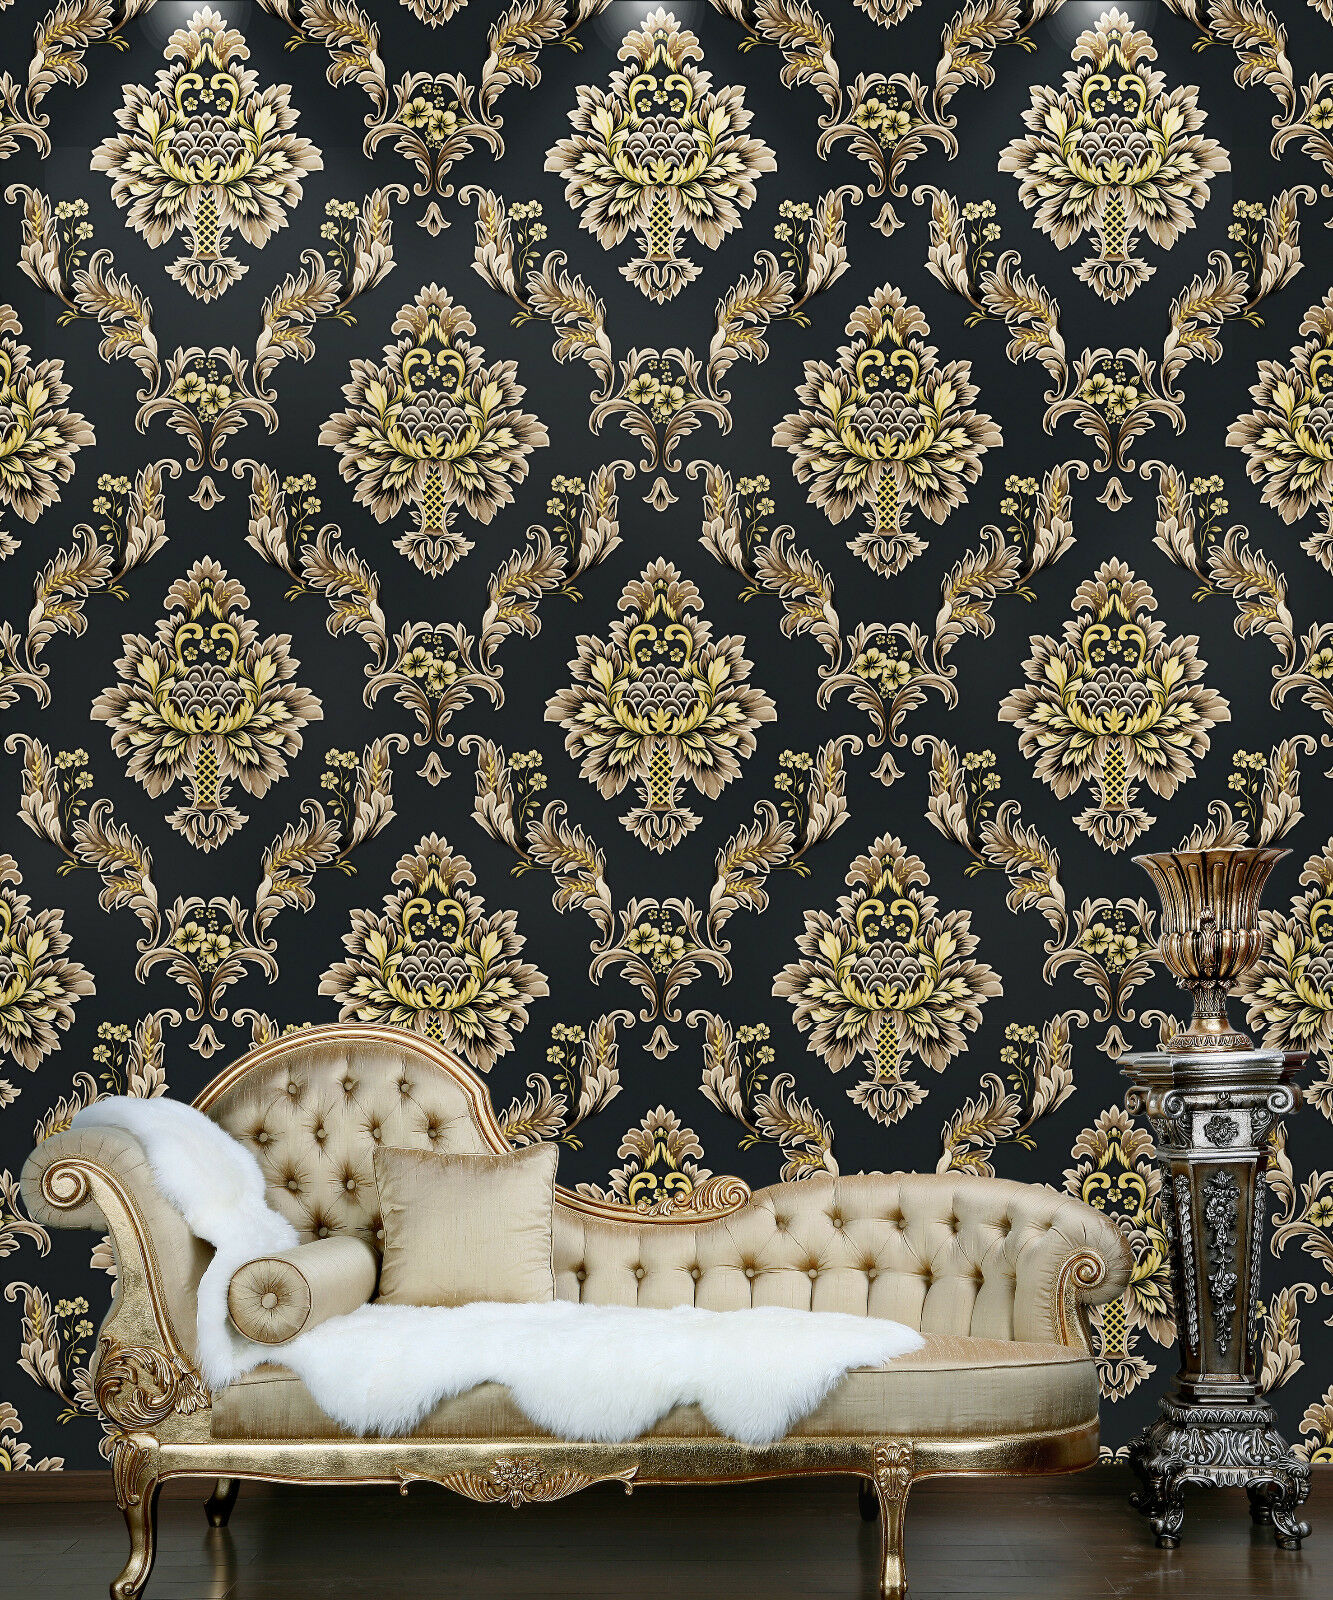 Black And Golden For Bedroom - HD Wallpaper 